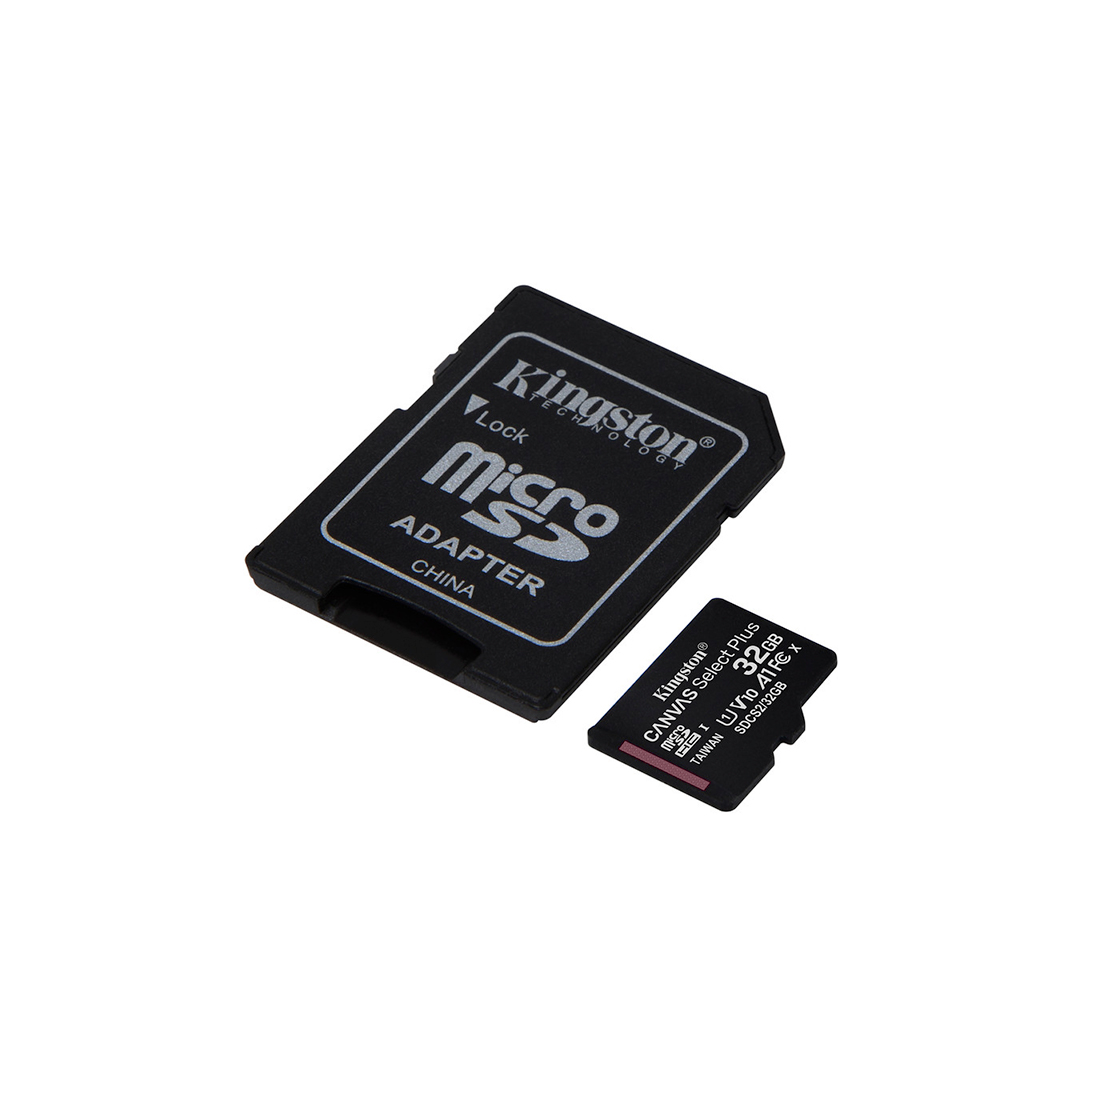 Карта памяти Kingston SDCS2/32GB Class 10 32GB + адаптер - купить по цене 2 490 тг. в интернет-магазине Forcecom.kz